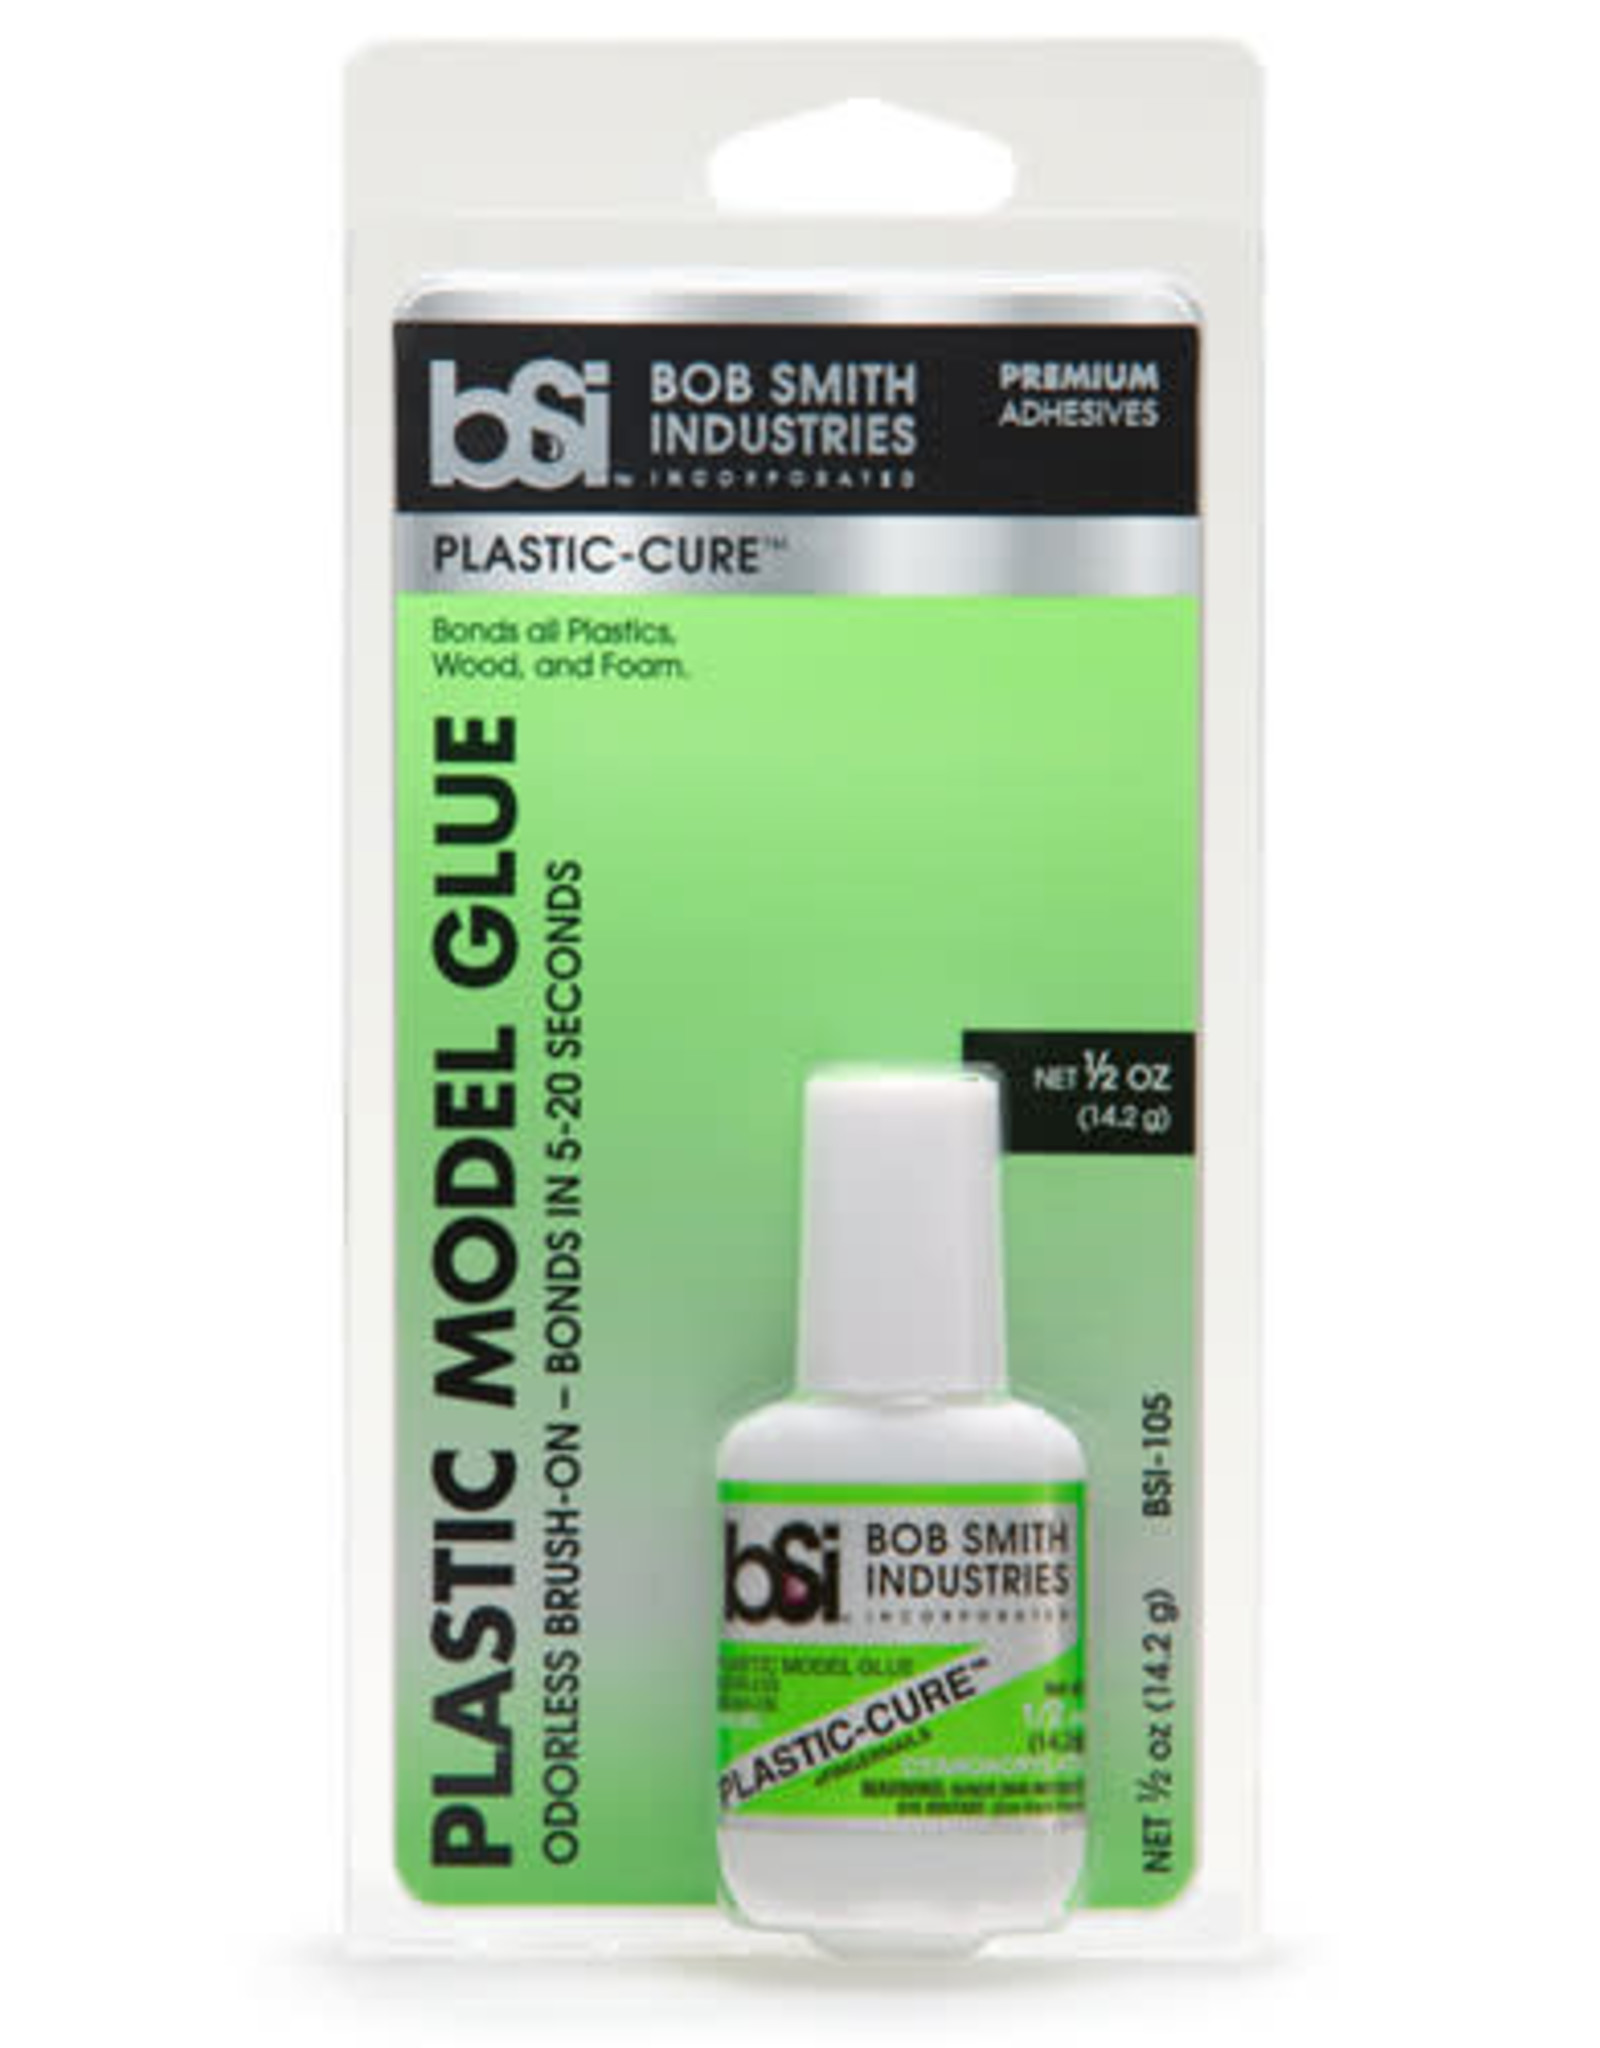 Bob Smith Industries Plastic-Cure 1/2 oz